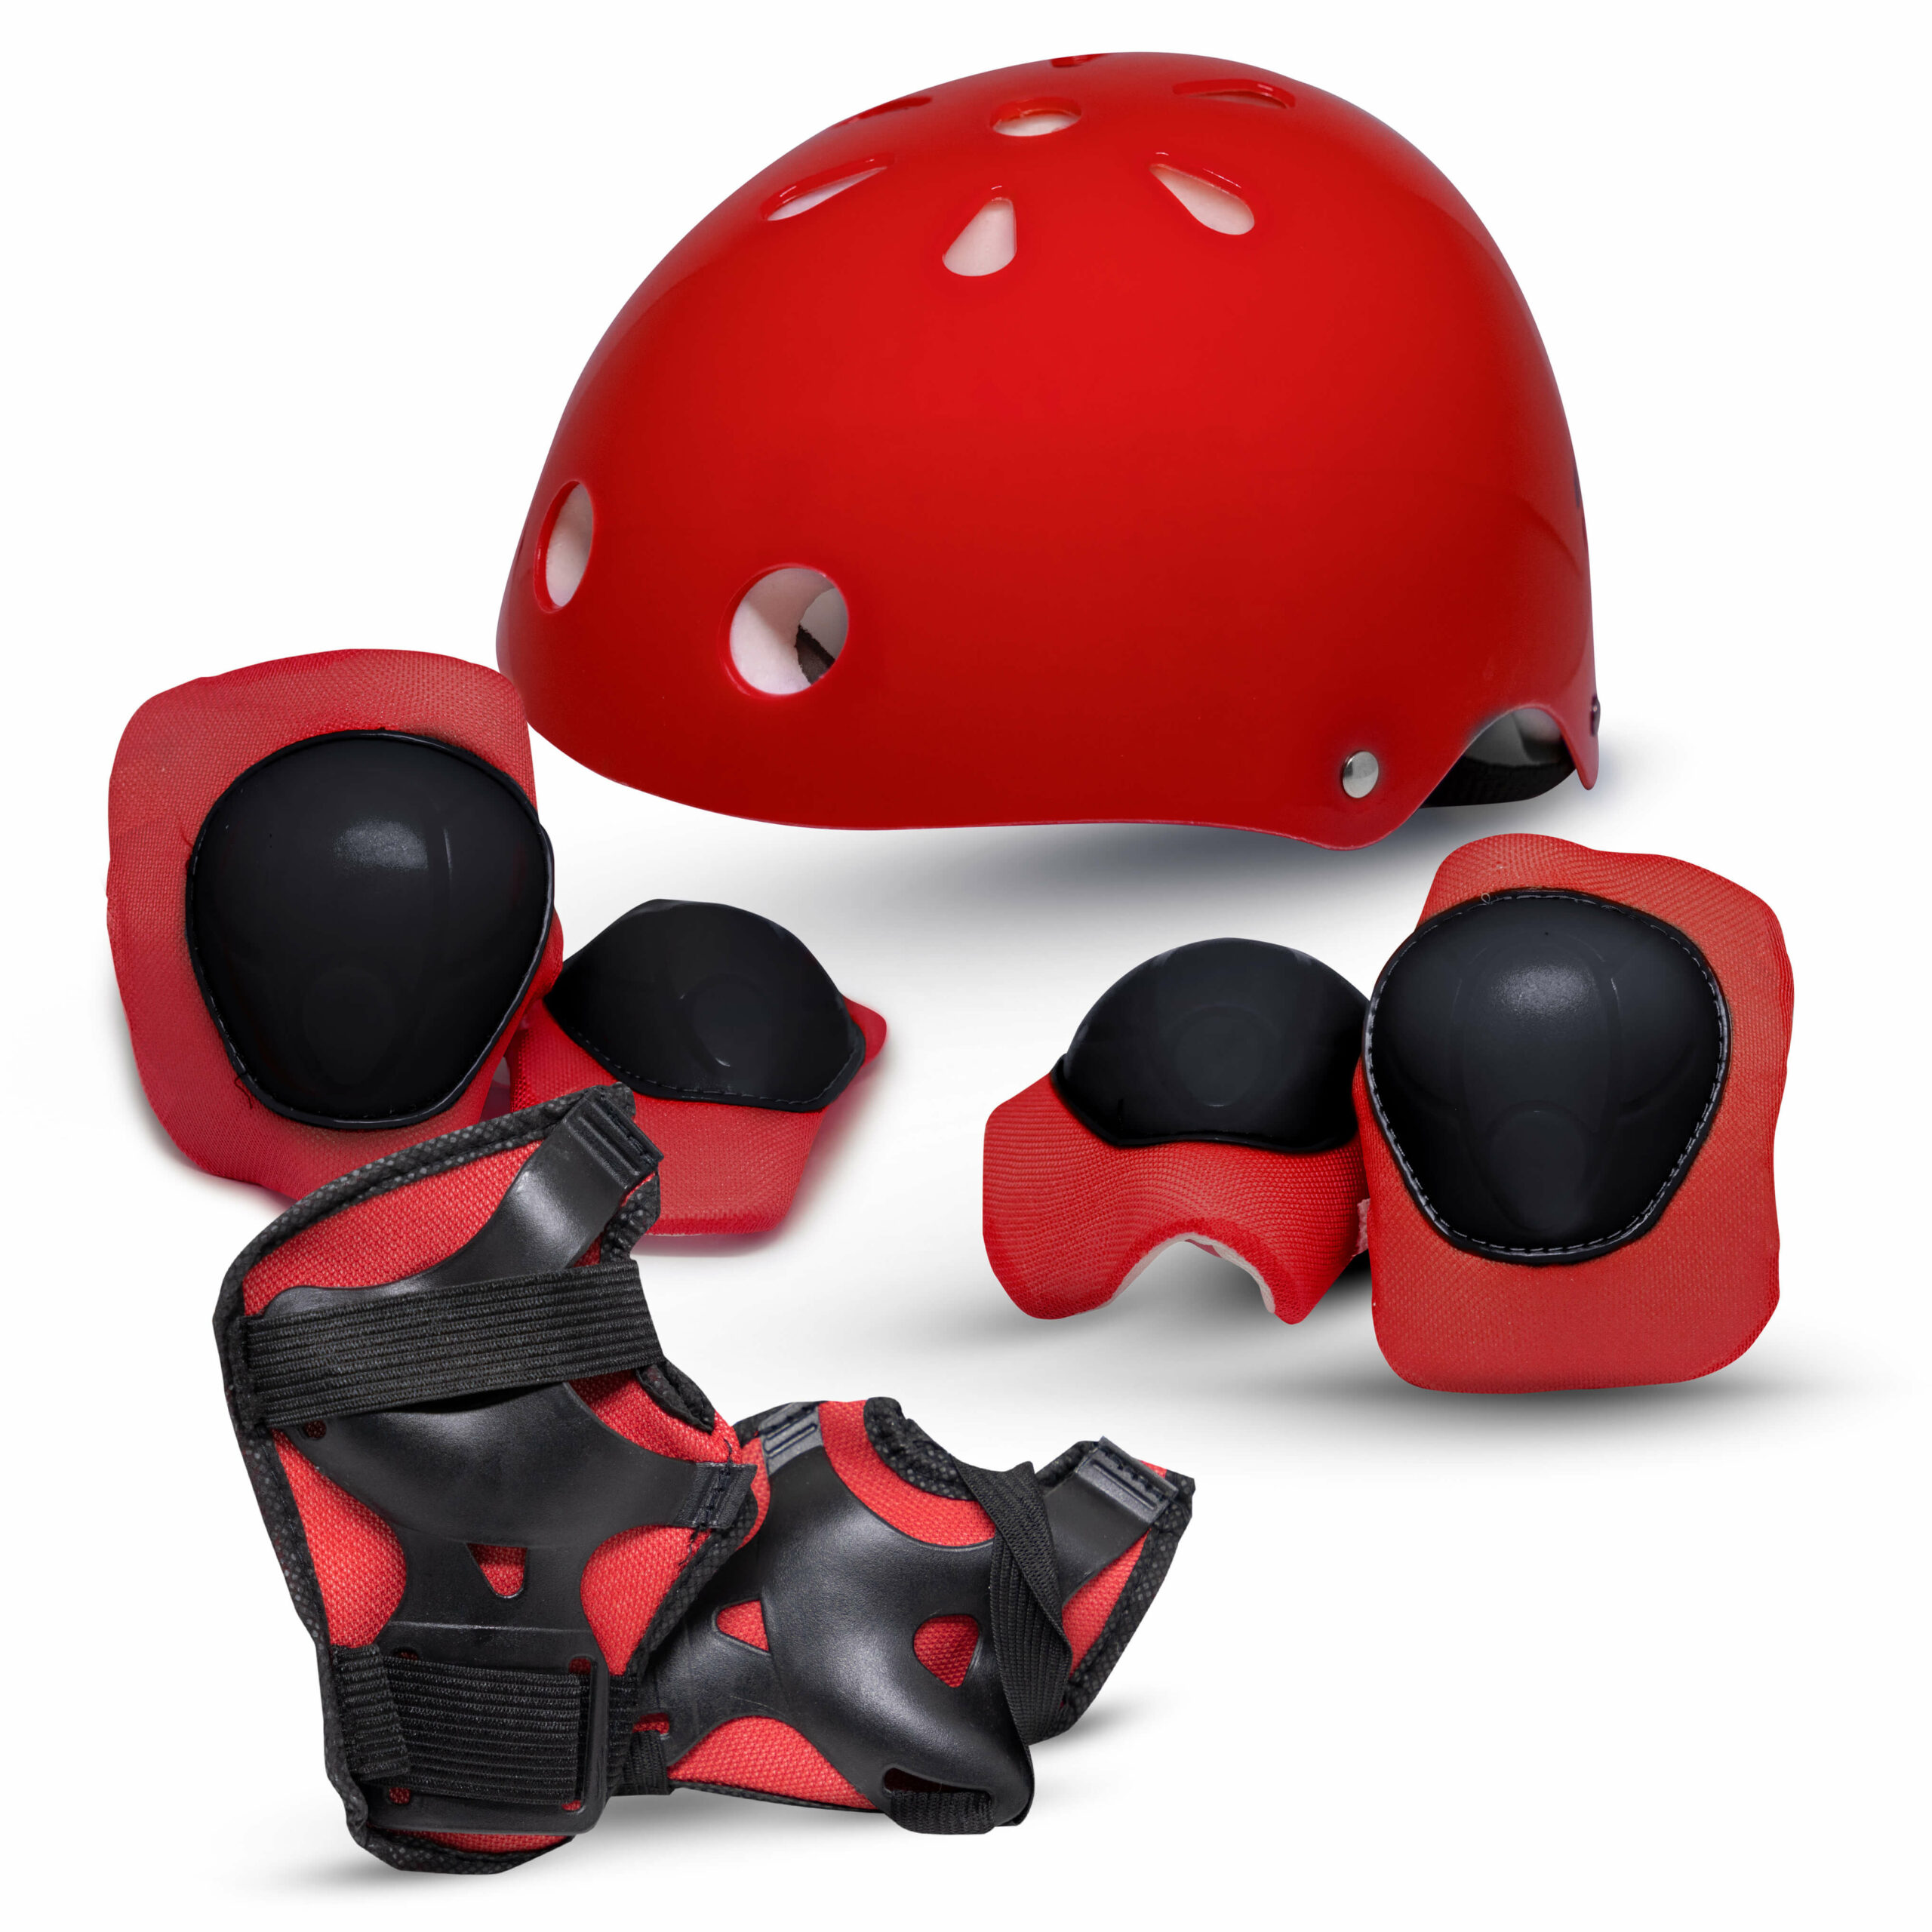 Capacete com kit proteção Little child | Rava Play - Vermelho